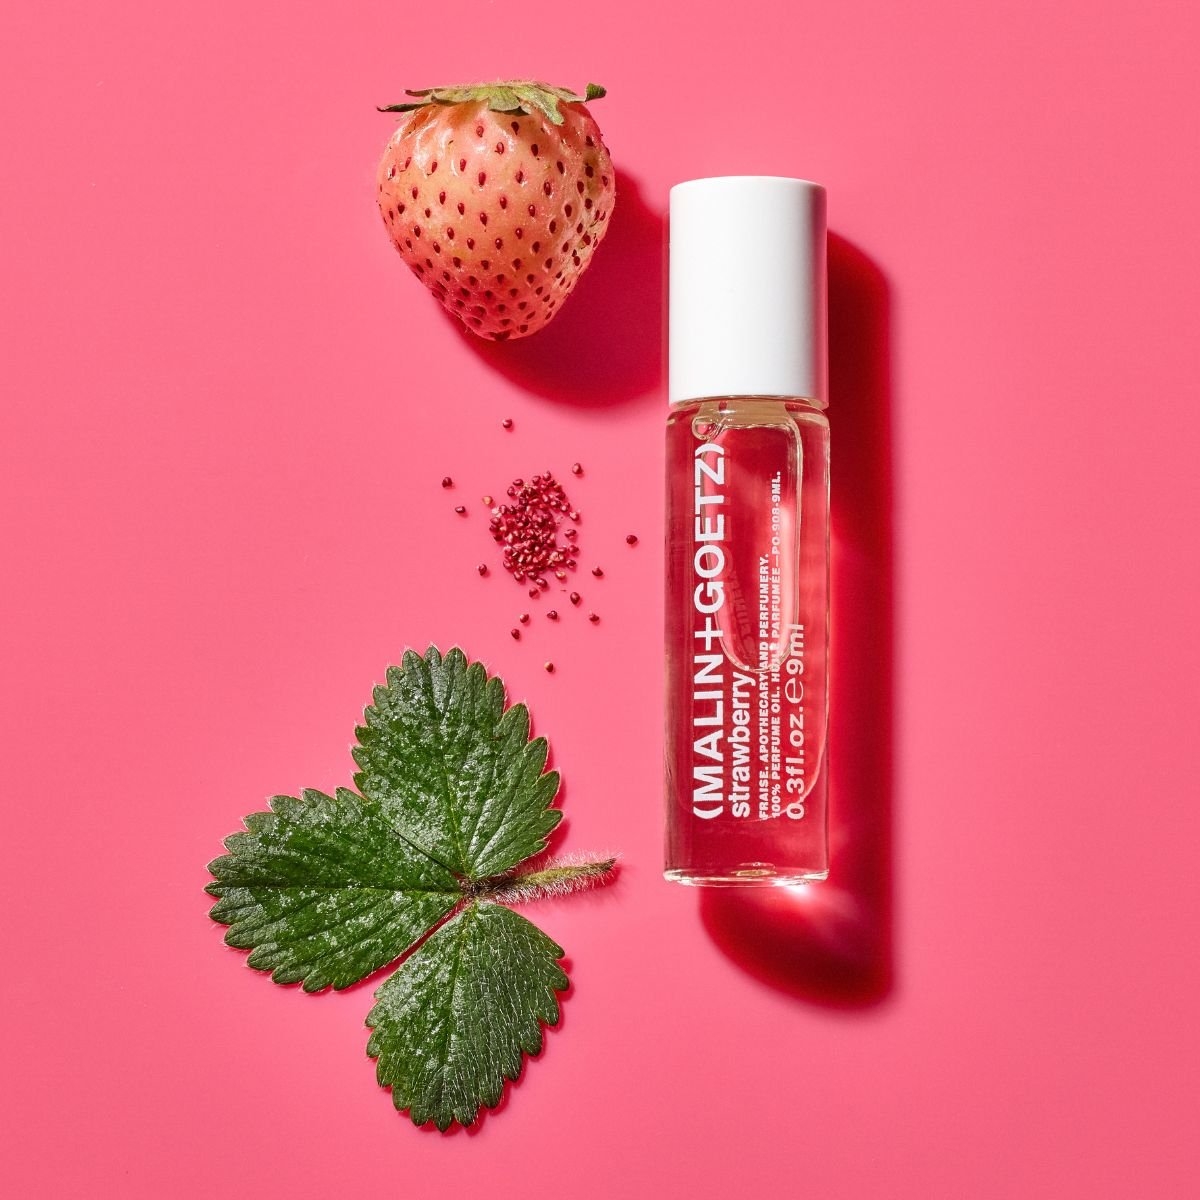 Afbeelding van Strawberry perfume oil van het merk Malin + Goetz